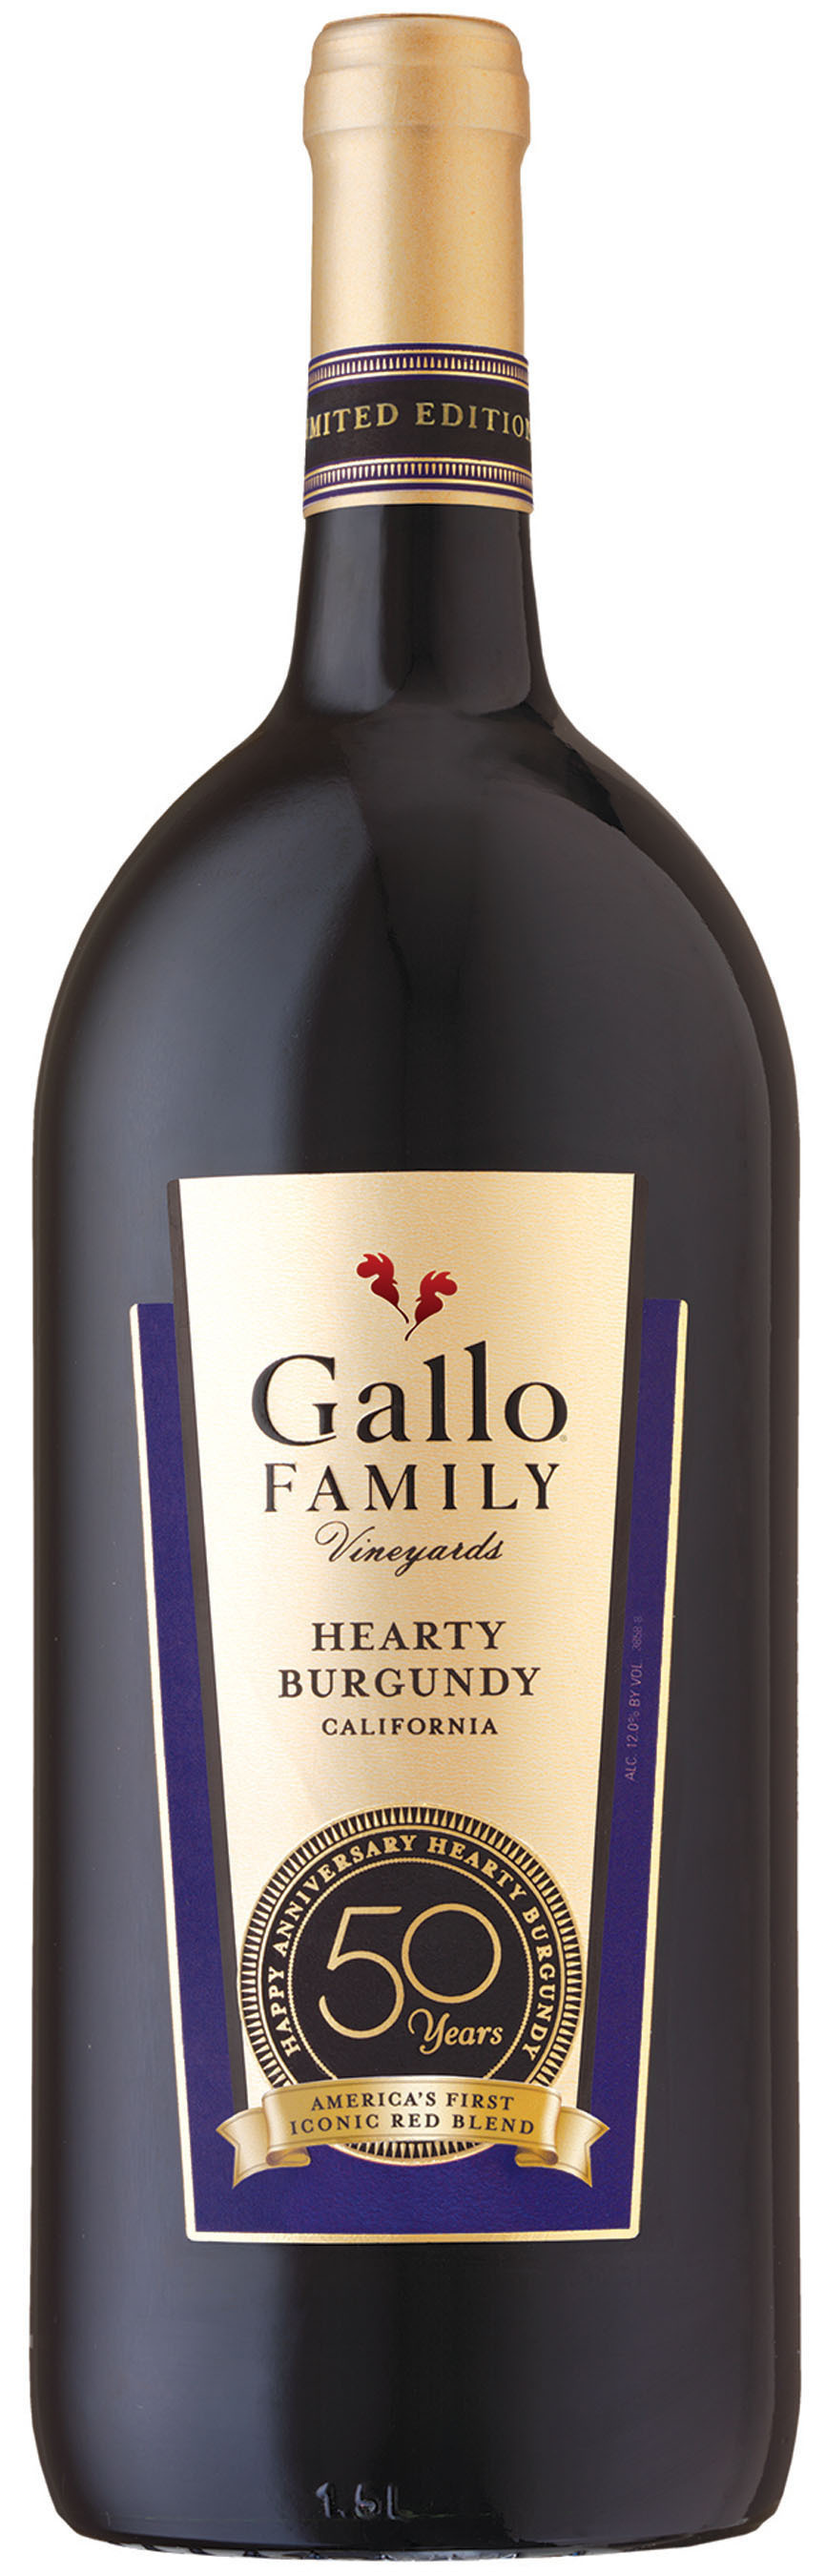 Gallo Family Vineyards Celebrates 50th Anniversary of its Hearty Burgundy Wine. (PRNewsFoto/Gallo Family Vineyards) (PRNewsFoto/GALLO FAMILY VINEYARDS)